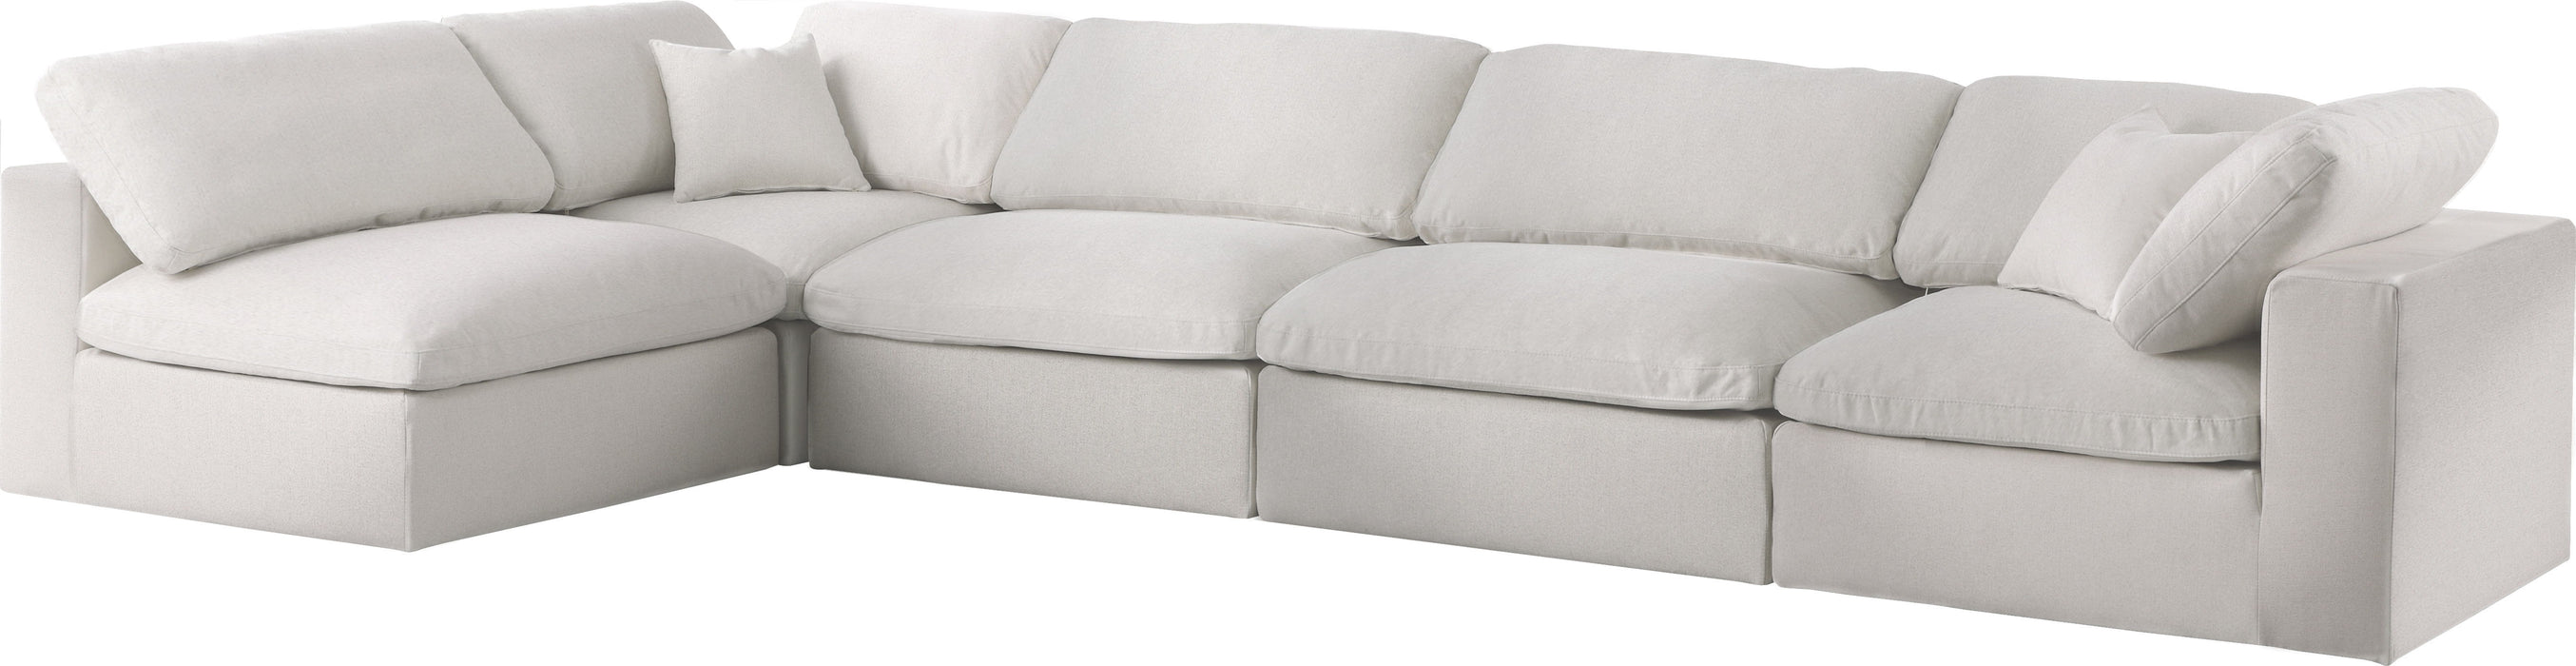 Serene - Linen Textured Fabric Deluxe Comfort Modular Sectional 5 Piece - Cream